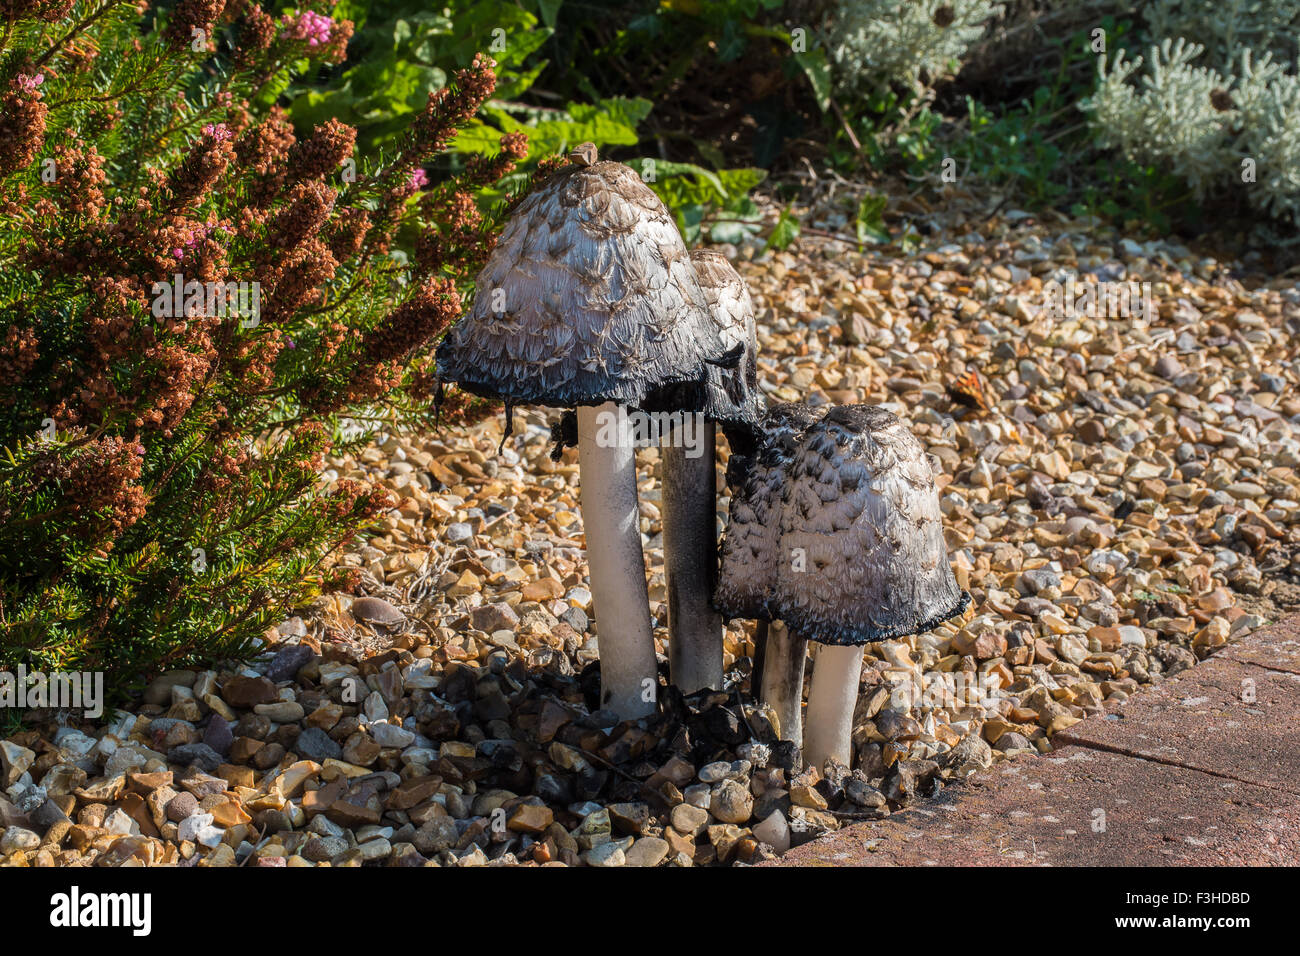 Shaggy Ink Caps Mushrooms growing in a Garden Stock Photo